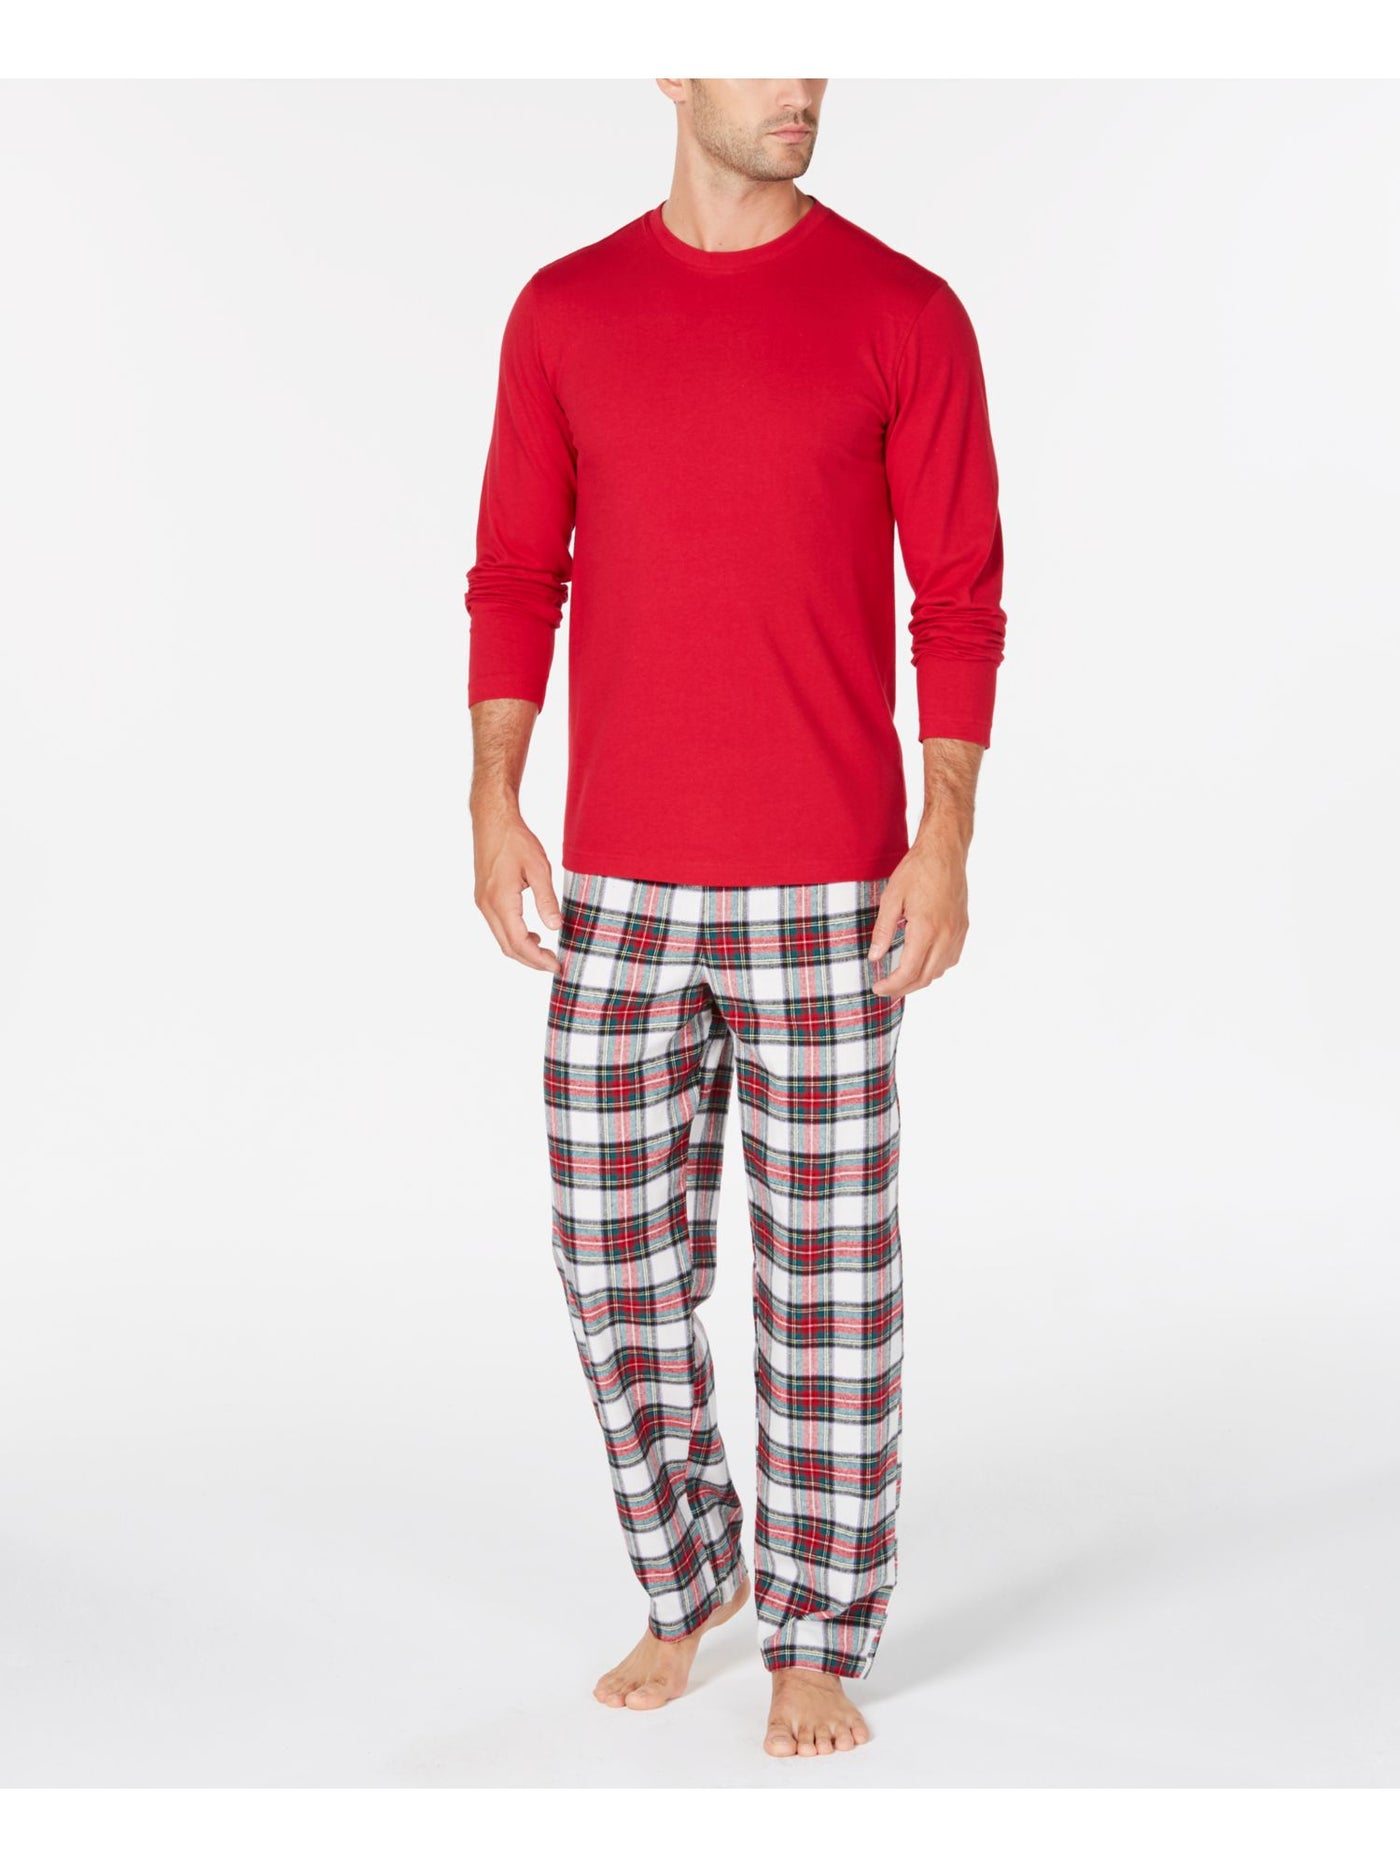 FAMILY PJs Mens Red Drawstring Pajamas L